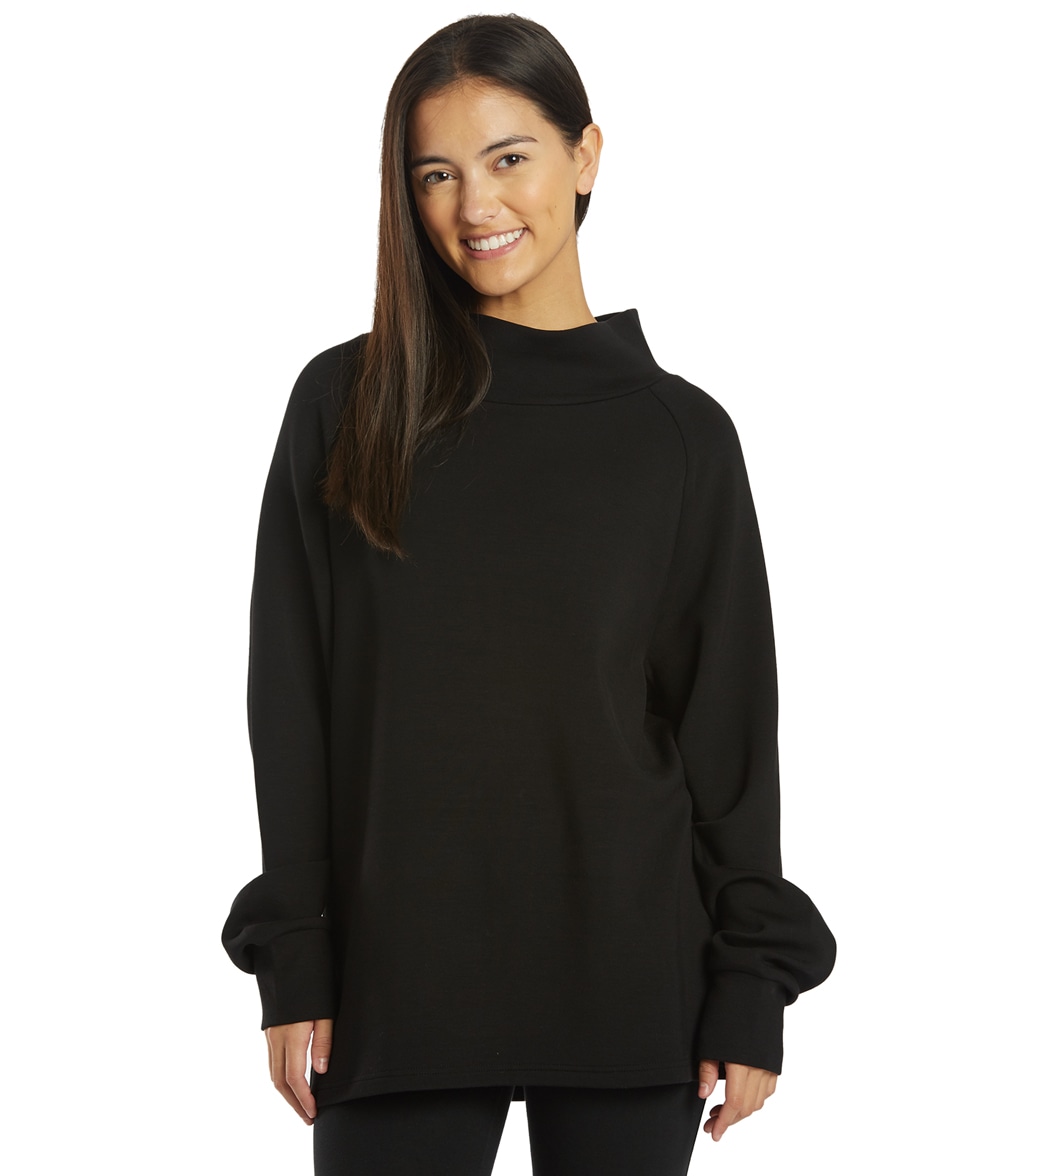 Varley Arcola Sweatshirt - Black Large Size Large - Swimoutlet.com